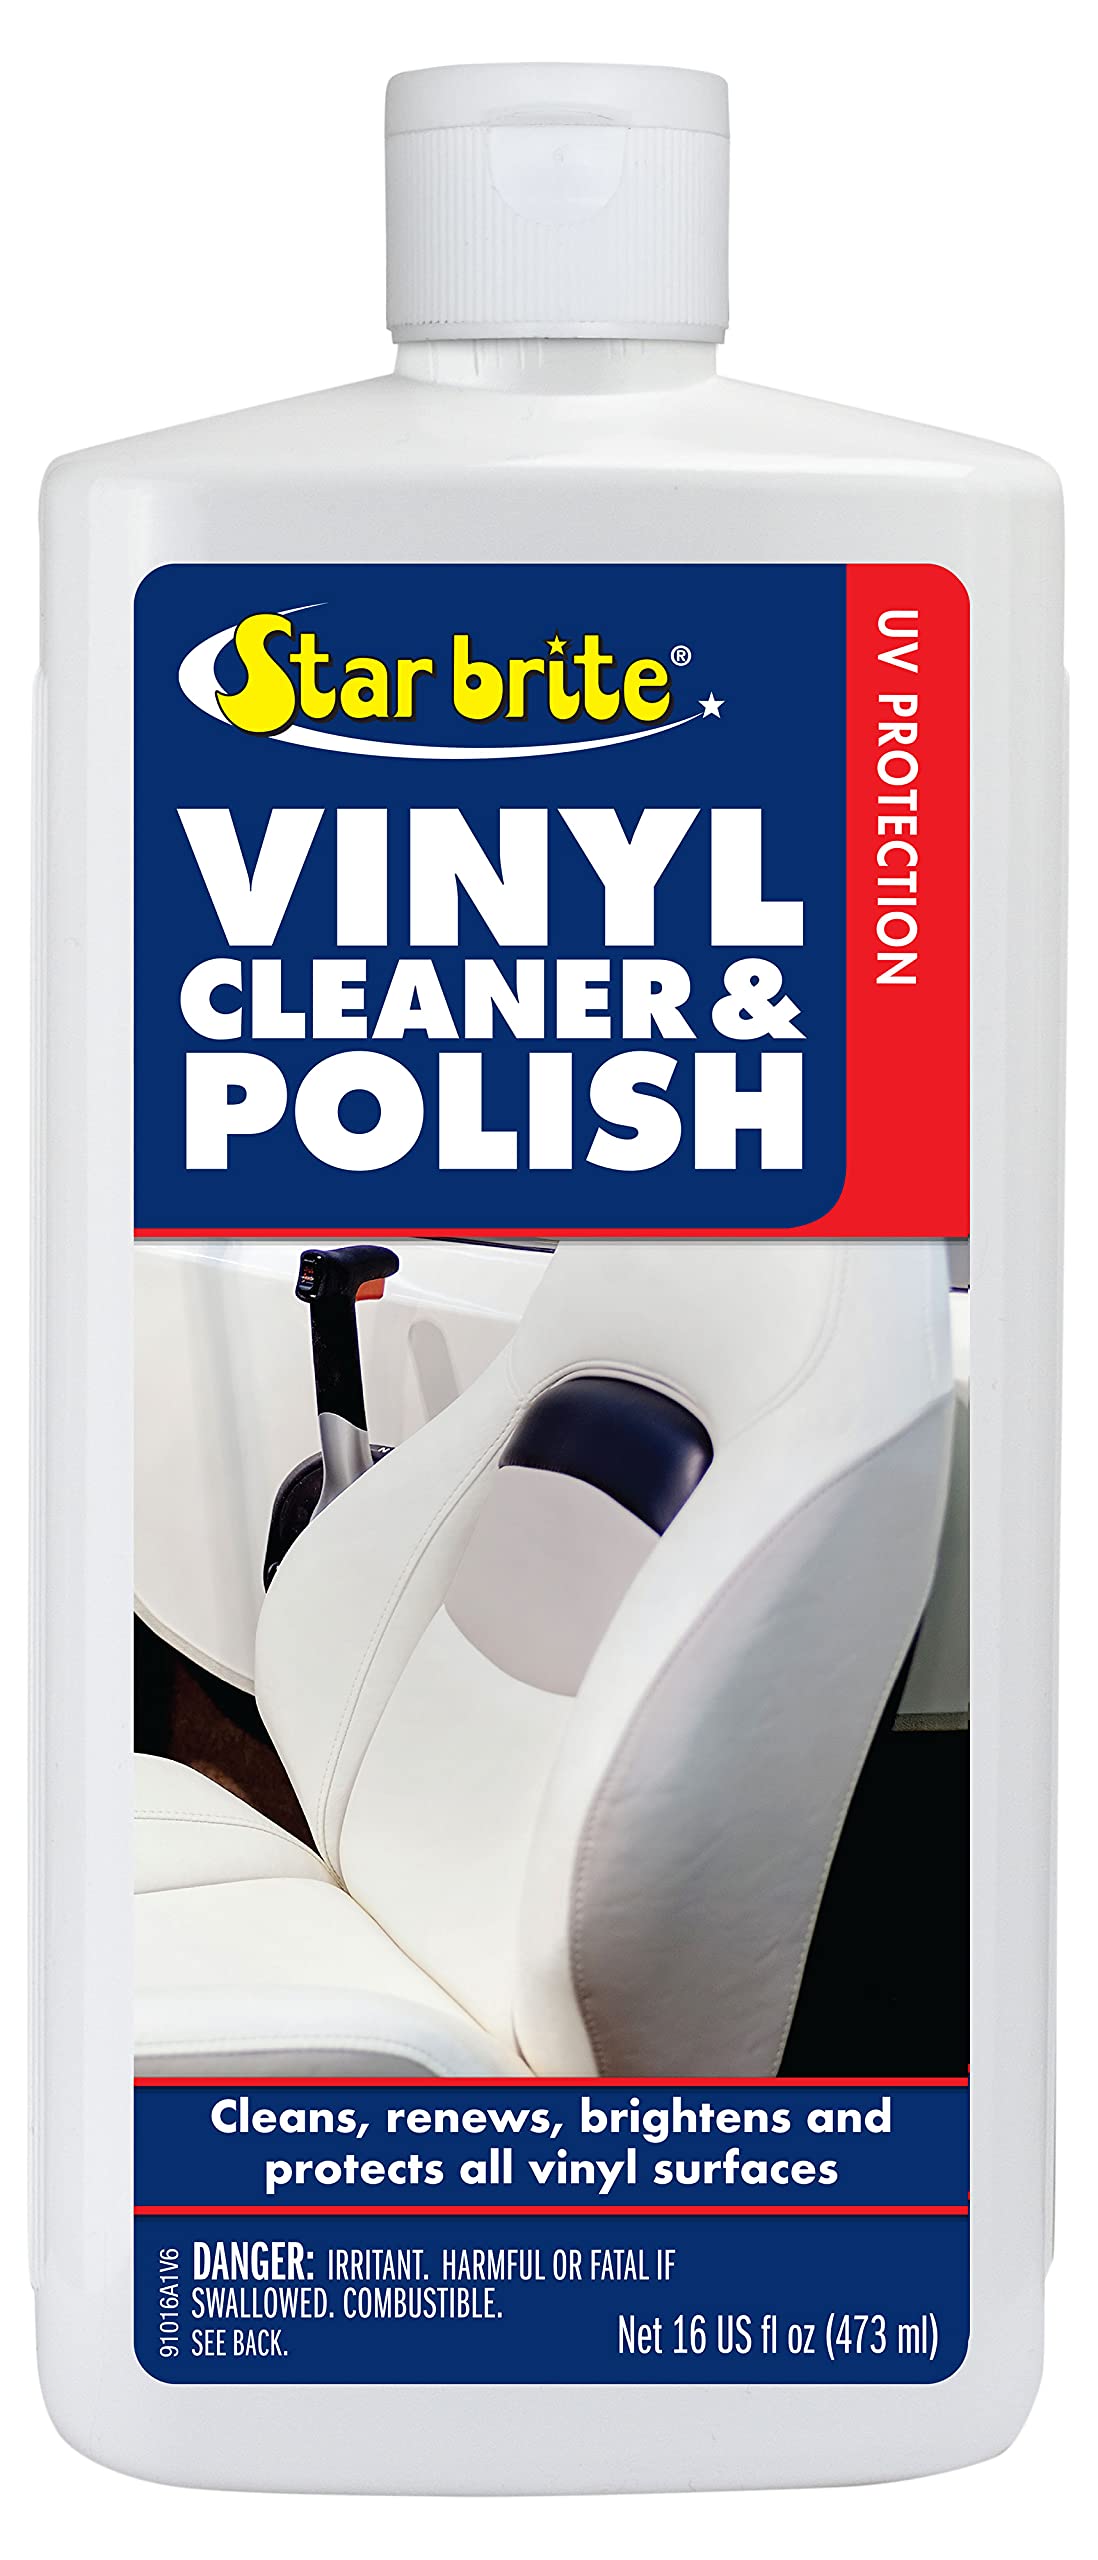 Star brite Vinyl Cleaner, Polish & Protectant